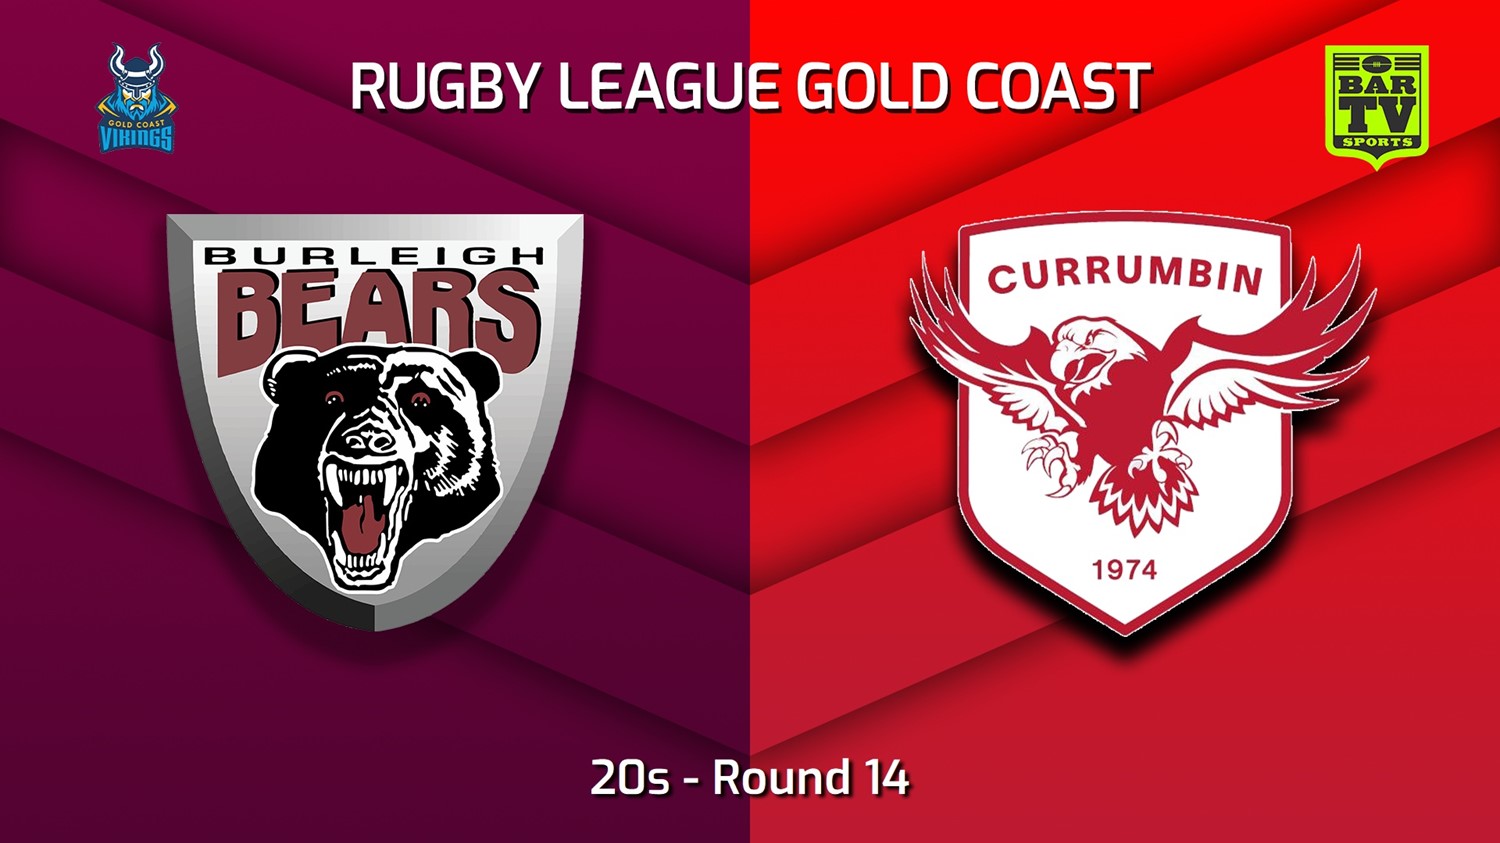 230806-Gold Coast Round 14 - 20s - Burleigh Bears v Currumbin Eagles Slate Image